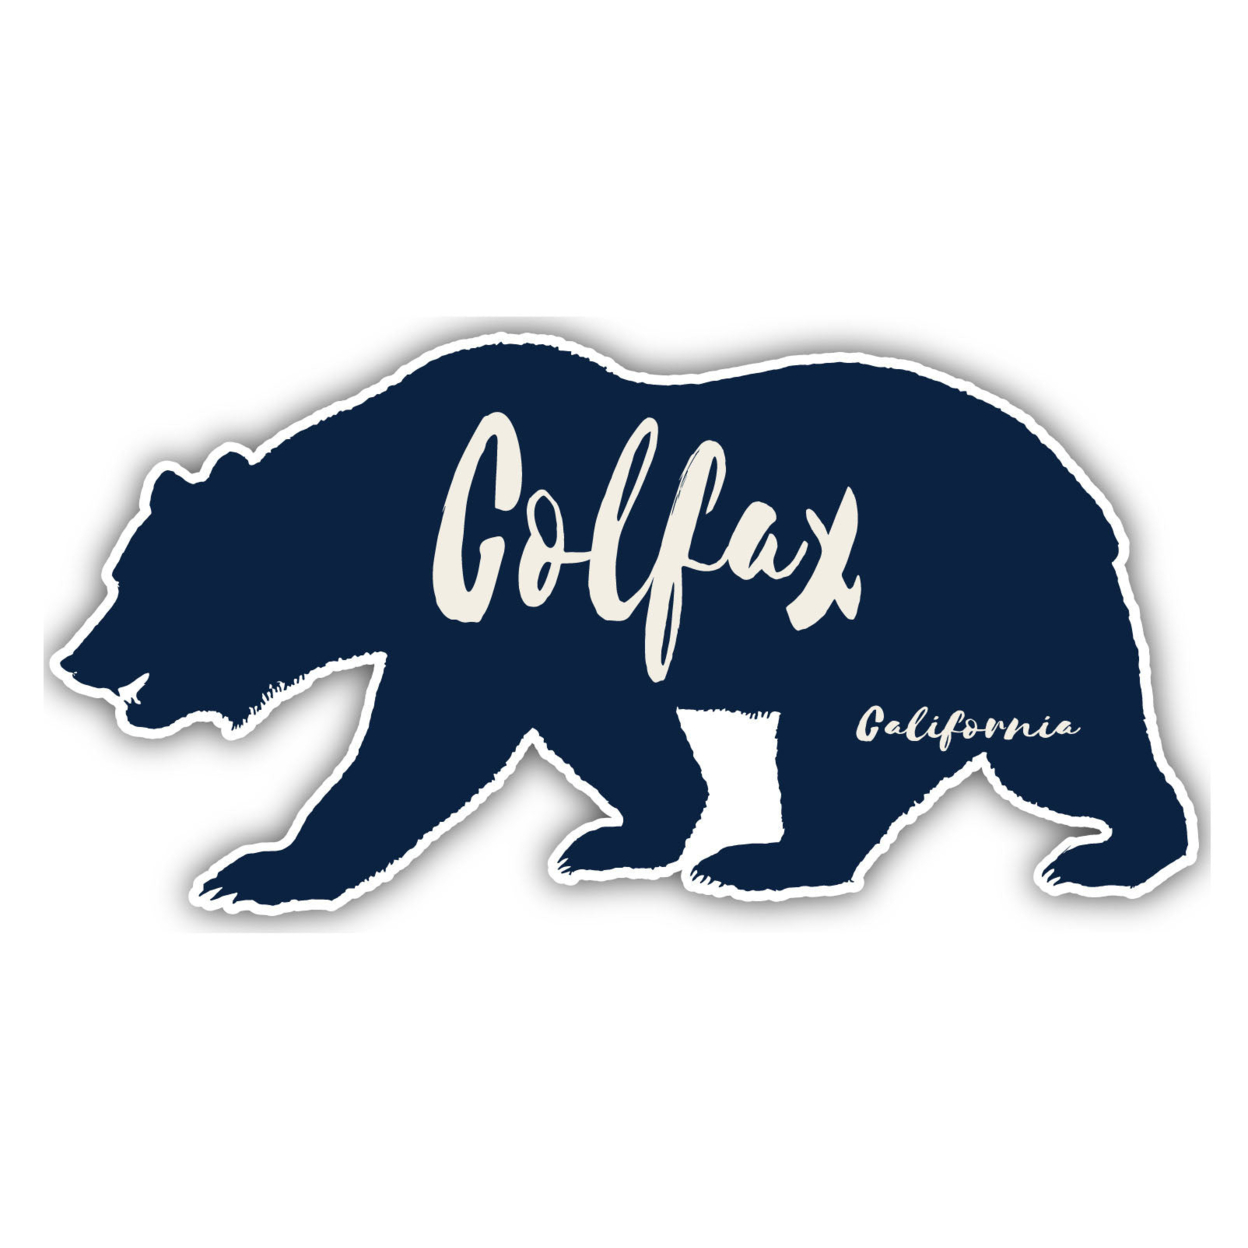 Colfax California Souvenir Decorative Stickers (Choose Theme And Size) - Single Unit, 8-Inch, Bear